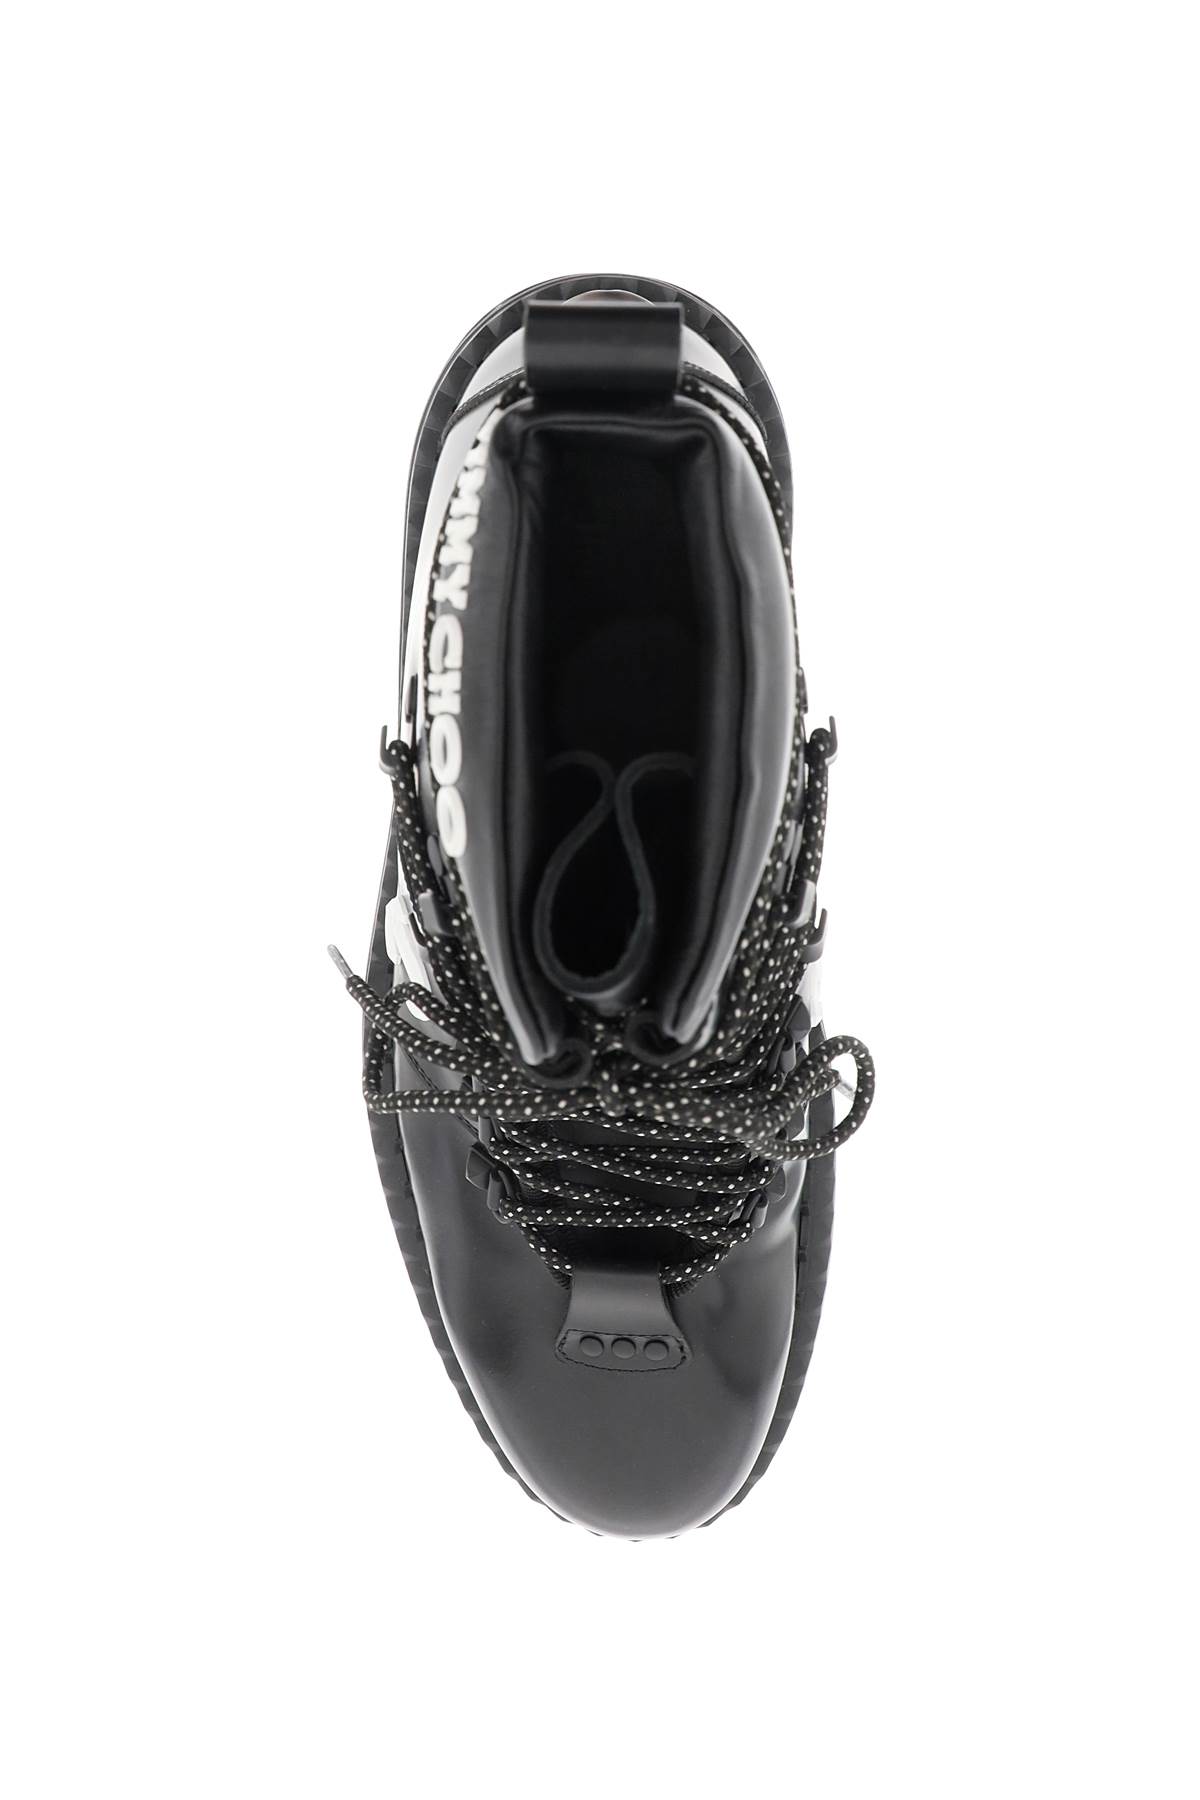 Shop Jimmy Choo Marlow Hiking Boots In Black (black)